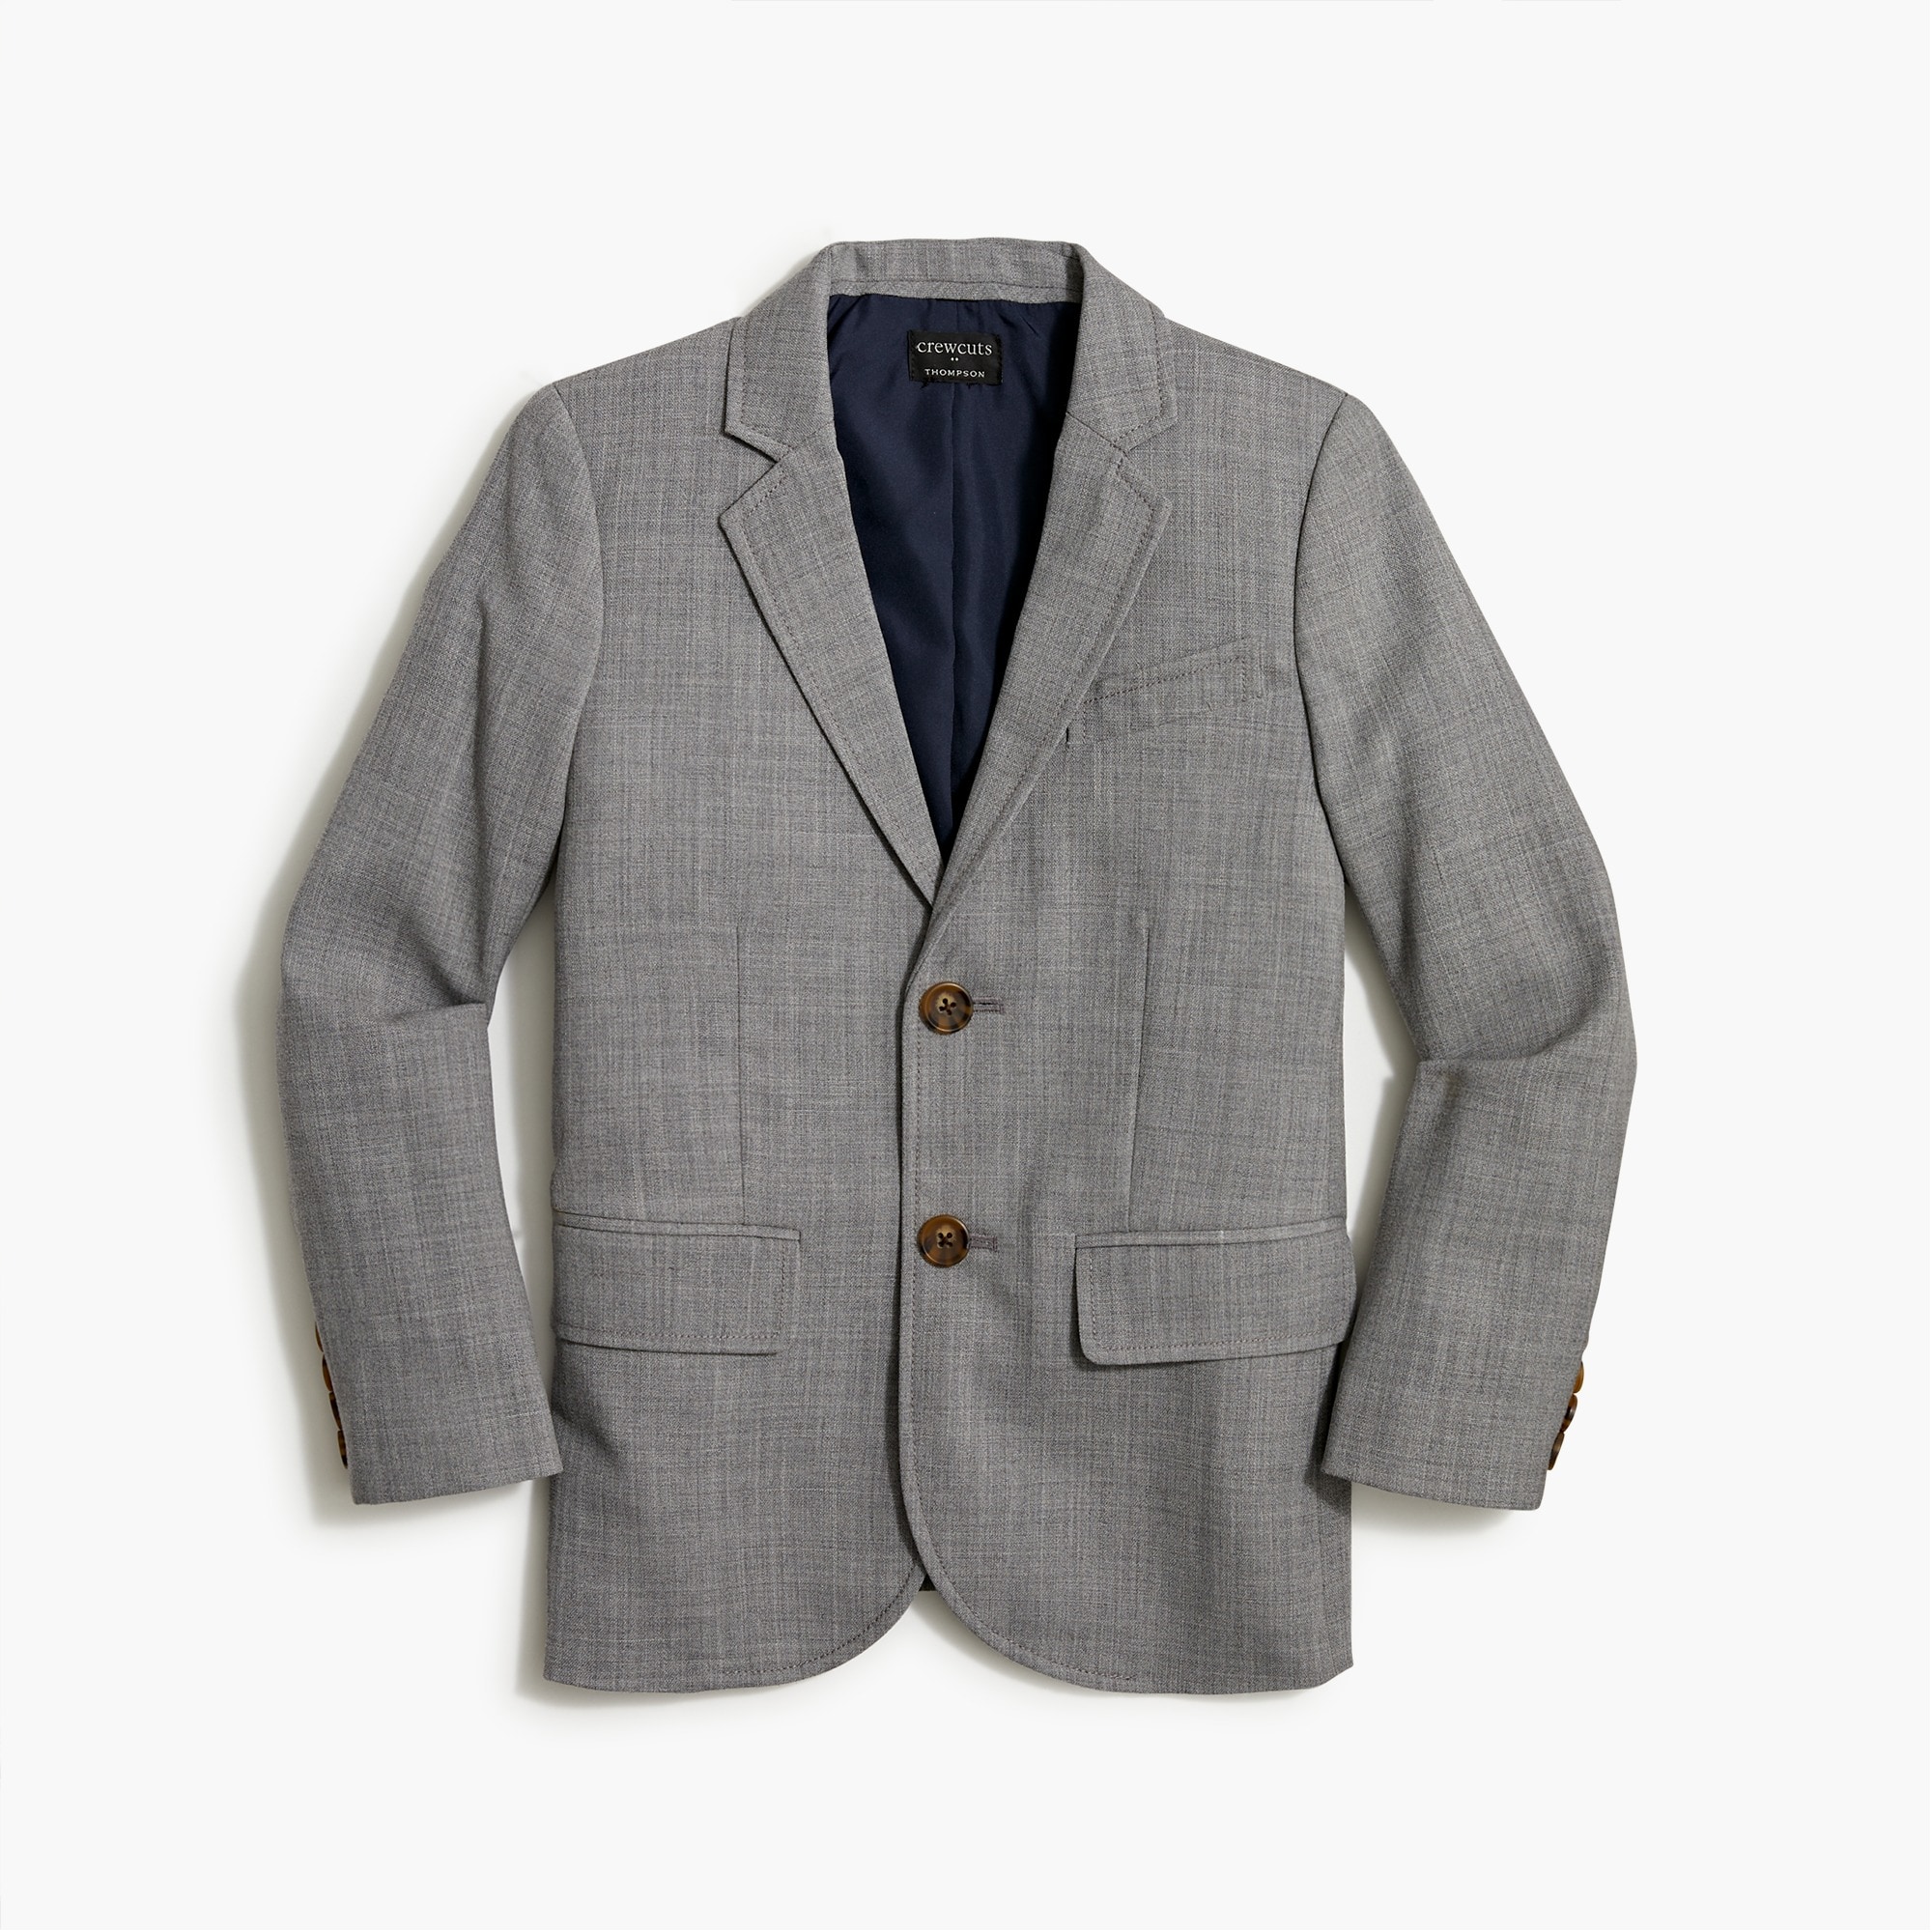 Boys' wool suit jacket